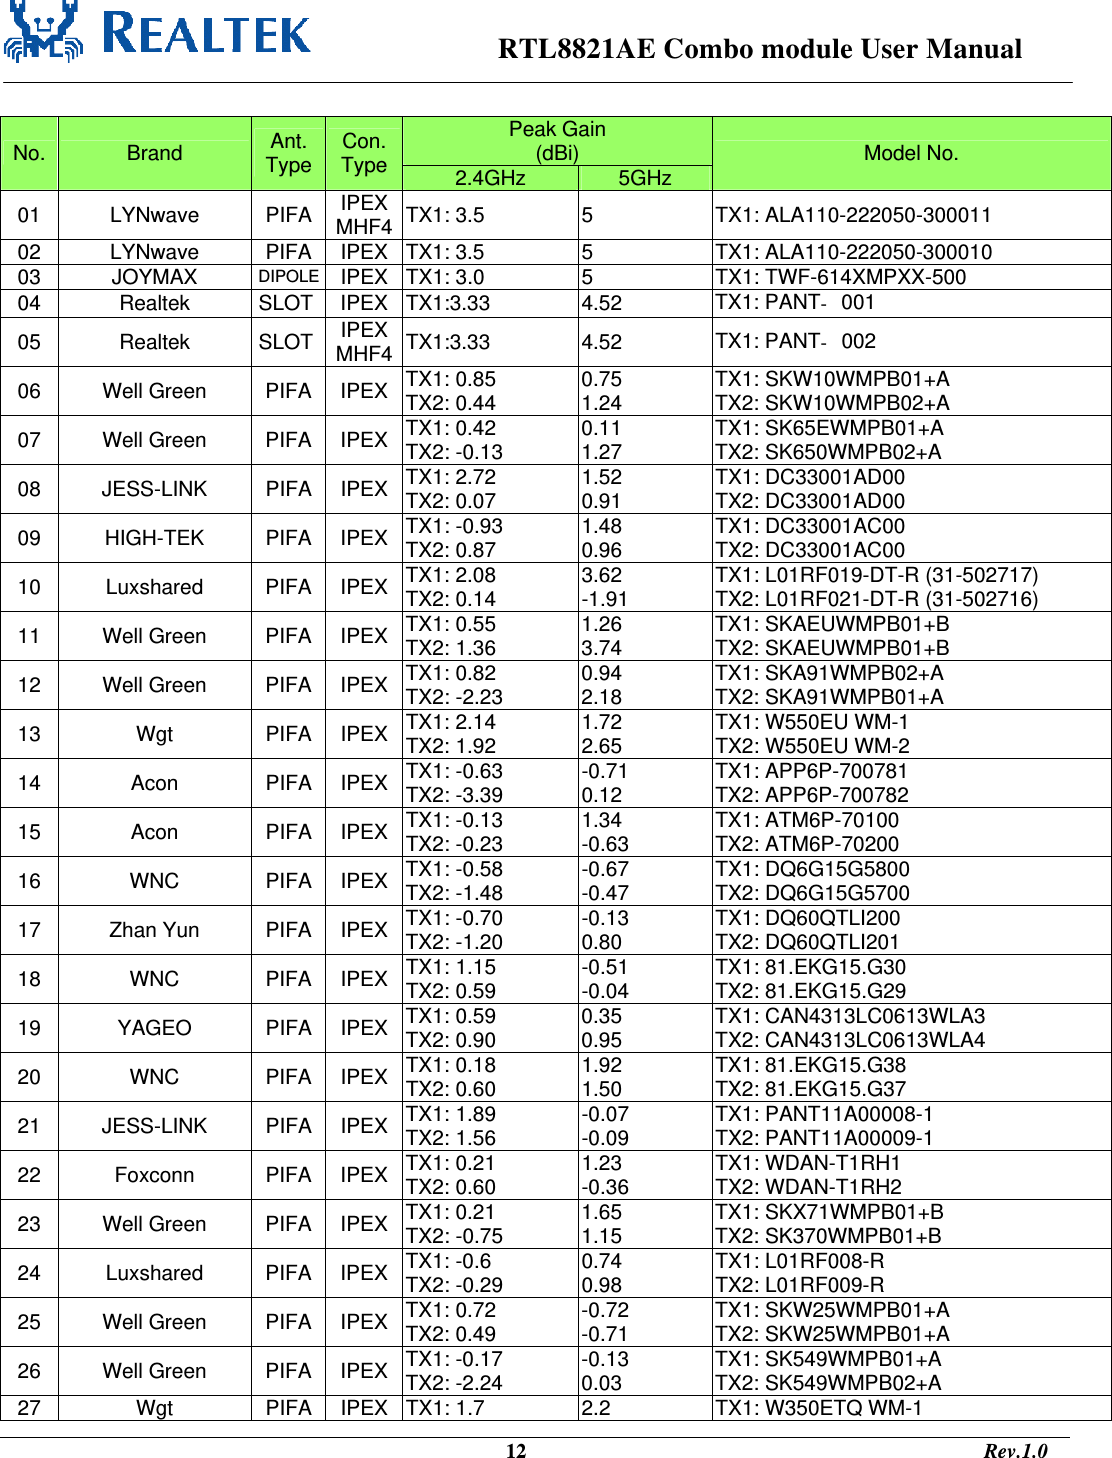                                                                      RTL8821AE Combo module User Manual                                                                                              12                                                                                       Rev.1.0   Peak Gain (dBi) No.  Brand  Ant. Type  Con. Type  2.4GHz  5GHz  Model No. 01 LYNwave PIFA IPEX MHF4  TX1: 3.5  5  TX1: ALA110-222050-300011 02 LYNwave PIFA IPEX TX1: 3.5  5  TX1: ALA110-222050-300010 03 JOYMAX DIPOLE  IPEX  TX1: 3.0  5  TX1: TWF-614XMPXX-500 04 Realtek SLOT  IPEX TX1:3.33  4.52  TX1: PANT001 05 Realtek SLOT  IPEX MHF4  TX1:3.33 4.52 TX1: PANT002 06 Well Green PIFA IPEX TX1: 0.85 TX2: 0.44  0.75 1.24  TX1: SKW10WMPB01+A TX2: SKW10WMPB02+A 07 Well Green PIFA IPEX TX1: 0.42 TX2: -0.13  0.11 1.27  TX1: SK65EWMPB01+A TX2: SK650WMPB02+A 08 JESS-LINK PIFA IPEX TX1: 2.72 TX2: 0.07  1.52 0.91  TX1: DC33001AD00 TX2: DC33001AD00 09 HIGH-TEK PIFA IPEX TX1: -0.93 TX2: 0.87  1.48 0.96  TX1: DC33001AC00 TX2: DC33001AC00 10 Luxshared PIFA IPEX TX1: 2.08 TX2: 0.14  3.62 -1.91  TX1: L01RF019-DT-R (31-502717) TX2: L01RF021-DT-R (31-502716) 11 Well Green PIFA IPEX TX1: 0.55 TX2: 1.36  1.26 3.74  TX1: SKAEUWMPB01+B TX2: SKAEUWMPB01+B 12 Well Green PIFA IPEX TX1: 0.82 TX2: -2.23  0.94 2.18  TX1: SKA91WMPB02+A TX2: SKA91WMPB01+A 13 Wgt PIFA IPEX TX1: 2.14 TX2: 1.92  1.72 2.65  TX1: W550EU WM-1 TX2: W550EU WM-2 14 Acon PIFA IPEX TX1: -0.63 TX2: -3.39  -0.71 0.12  TX1: APP6P-700781 TX2: APP6P-700782 15 Acon PIFA IPEX TX1: -0.13 TX2: -0.23  1.34 -0.63  TX1: ATM6P-70100 TX2: ATM6P-70200 16 WNC PIFA IPEX TX1: -0.58 TX2: -1.48  -0.67 -0.47  TX1: DQ6G15G5800 TX2: DQ6G15G5700 17 Zhan Yun PIFA IPEX TX1: -0.70 TX2: -1.20  -0.13 0.80  TX1: DQ60QTLI200 TX2: DQ60QTLI201 18 WNC PIFA IPEX TX1: 1.15 TX2: 0.59  -0.51 -0.04  TX1: 81.EKG15.G30 TX2: 81.EKG15.G29 19 YAGEO PIFA IPEX TX1: 0.59 TX2: 0.90  0.35 0.95  TX1: CAN4313LC0613WLA3 TX2: CAN4313LC0613WLA4 20 WNC PIFA IPEX TX1: 0.18 TX2: 0.60  1.92 1.50  TX1: 81.EKG15.G38 TX2: 81.EKG15.G37 21 JESS-LINK PIFA IPEX TX1: 1.89 TX2: 1.56  -0.07 -0.09  TX1: PANT11A00008-1 TX2: PANT11A00009-1 22 Foxconn PIFA IPEX TX1: 0.21 TX2: 0.60  1.23 -0.36  TX1: WDAN-T1RH1 TX2: WDAN-T1RH2 23 Well Green PIFA IPEX TX1: 0.21 TX2: -0.75  1.65 1.15  TX1: SKX71WMPB01+B TX2: SK370WMPB01+B 24 Luxshared PIFA IPEX TX1: -0.6 TX2: -0.29  0.74 0.98  TX1: L01RF008-R TX2: L01RF009-R 25 Well Green PIFA IPEX TX1: 0.72 TX2: 0.49  -0.72 -0.71  TX1: SKW25WMPB01+A TX2: SKW25WMPB01+A 26 Well Green PIFA IPEX TX1: -0.17 TX2: -2.24  -0.13 0.03  TX1: SK549WMPB01+A TX2: SK549WMPB02+A 27  Wgt  PIFA  IPEX  TX1: 1.7  2.2  TX1: W350ETQ WM-1 